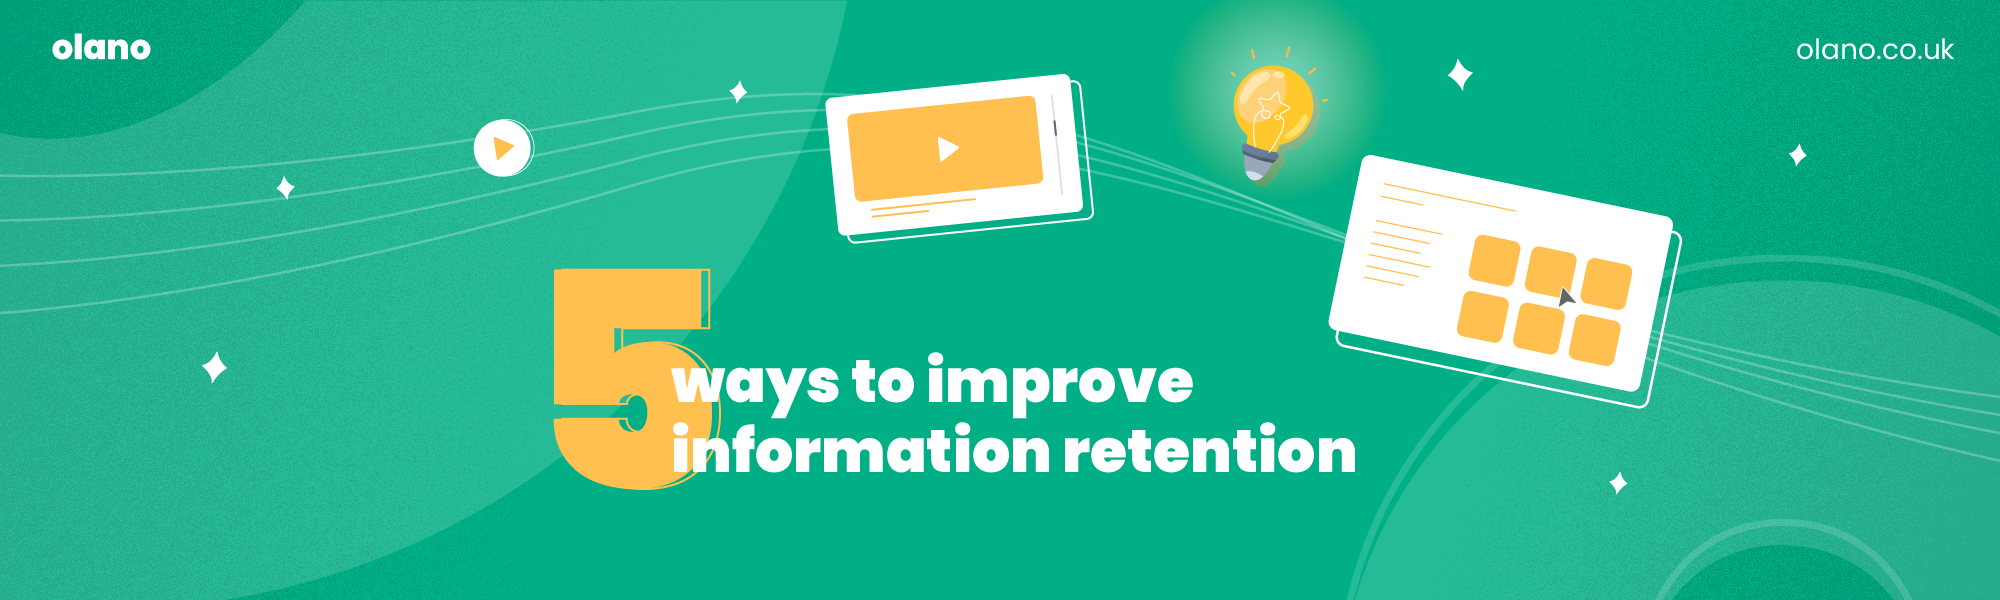 5 Ways to improve information retention